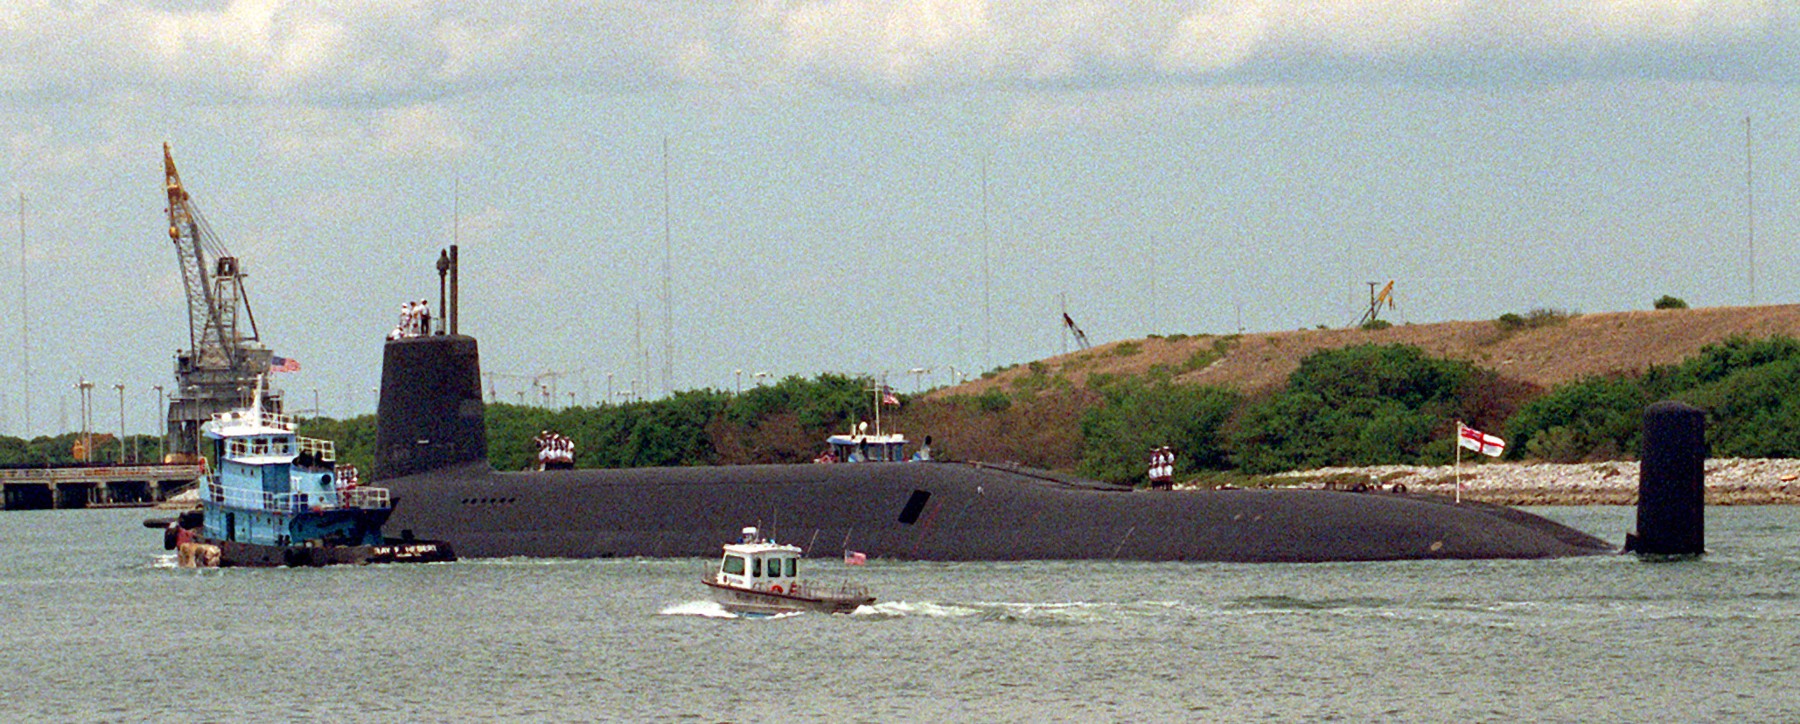 s28 hms vanguard ssbn ballistic missile submarine royal navy 03